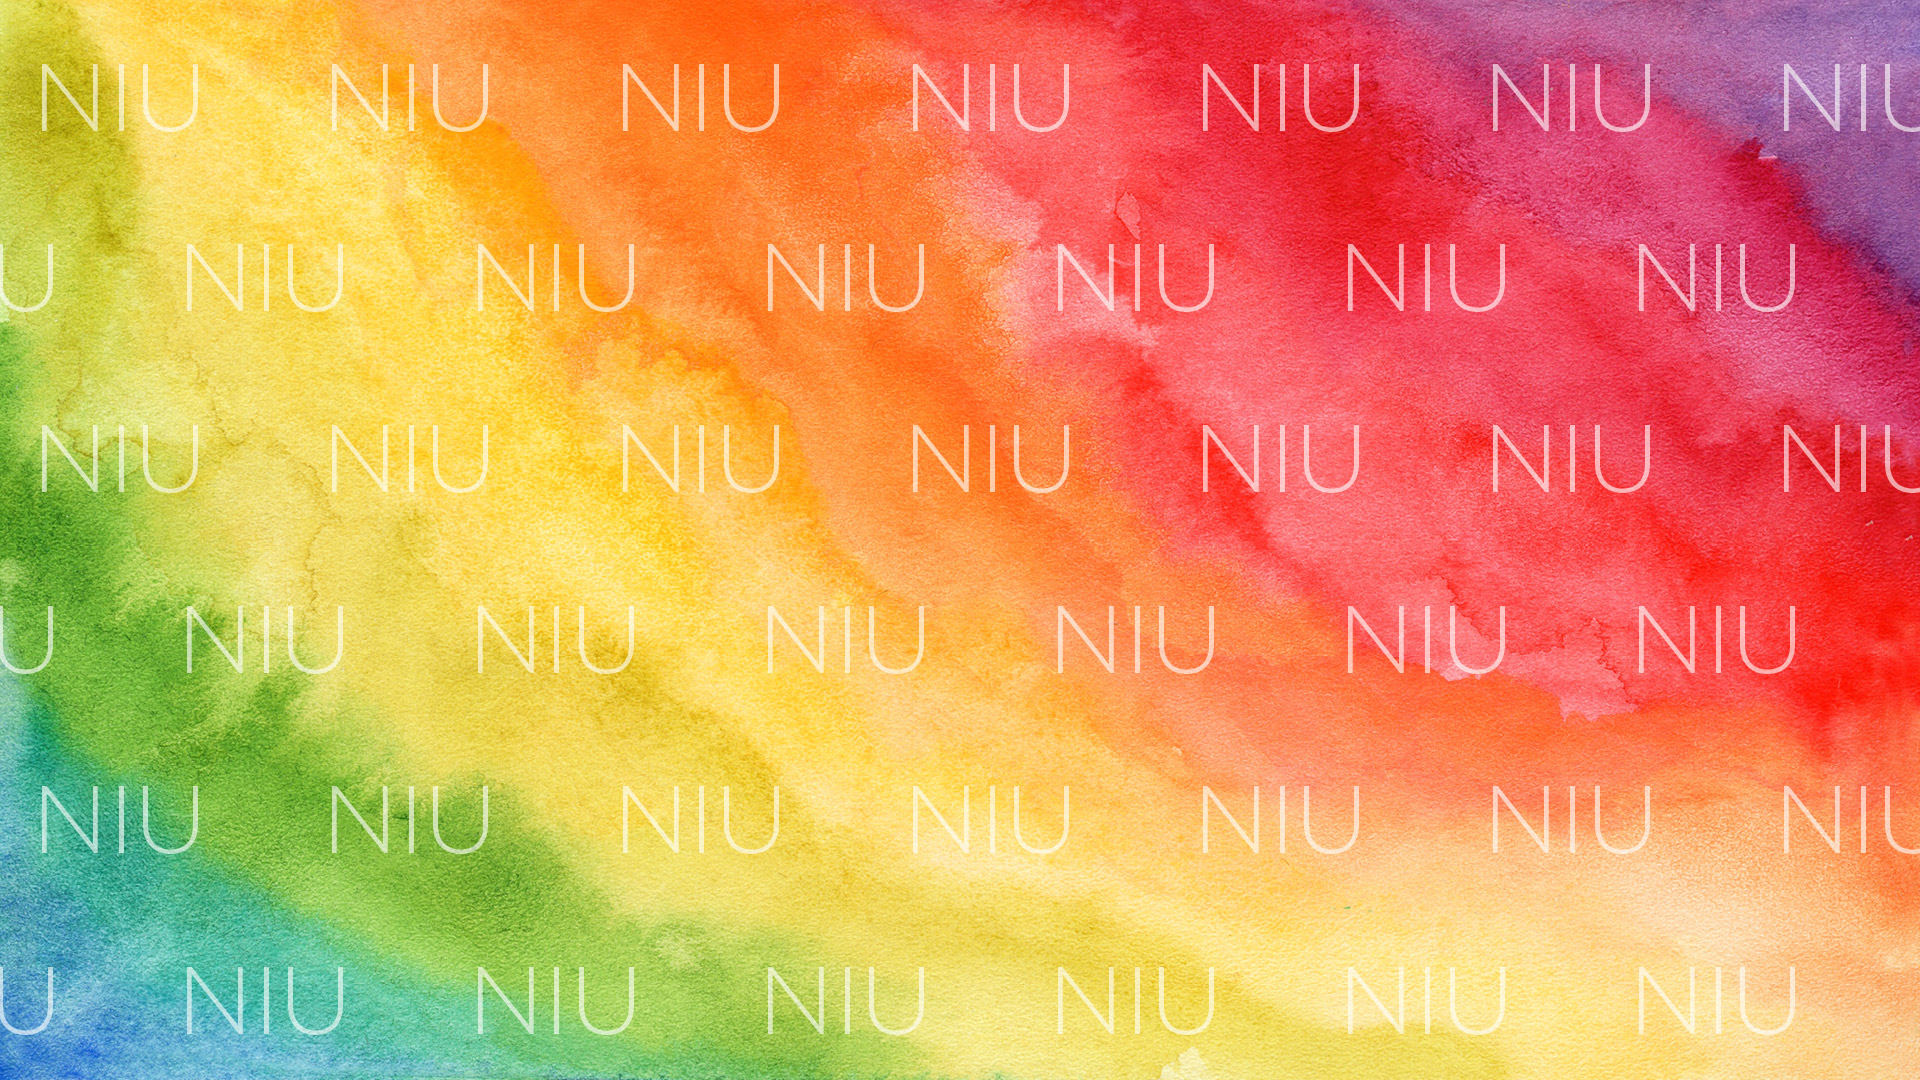 zoom-background - NIU on rainbow background